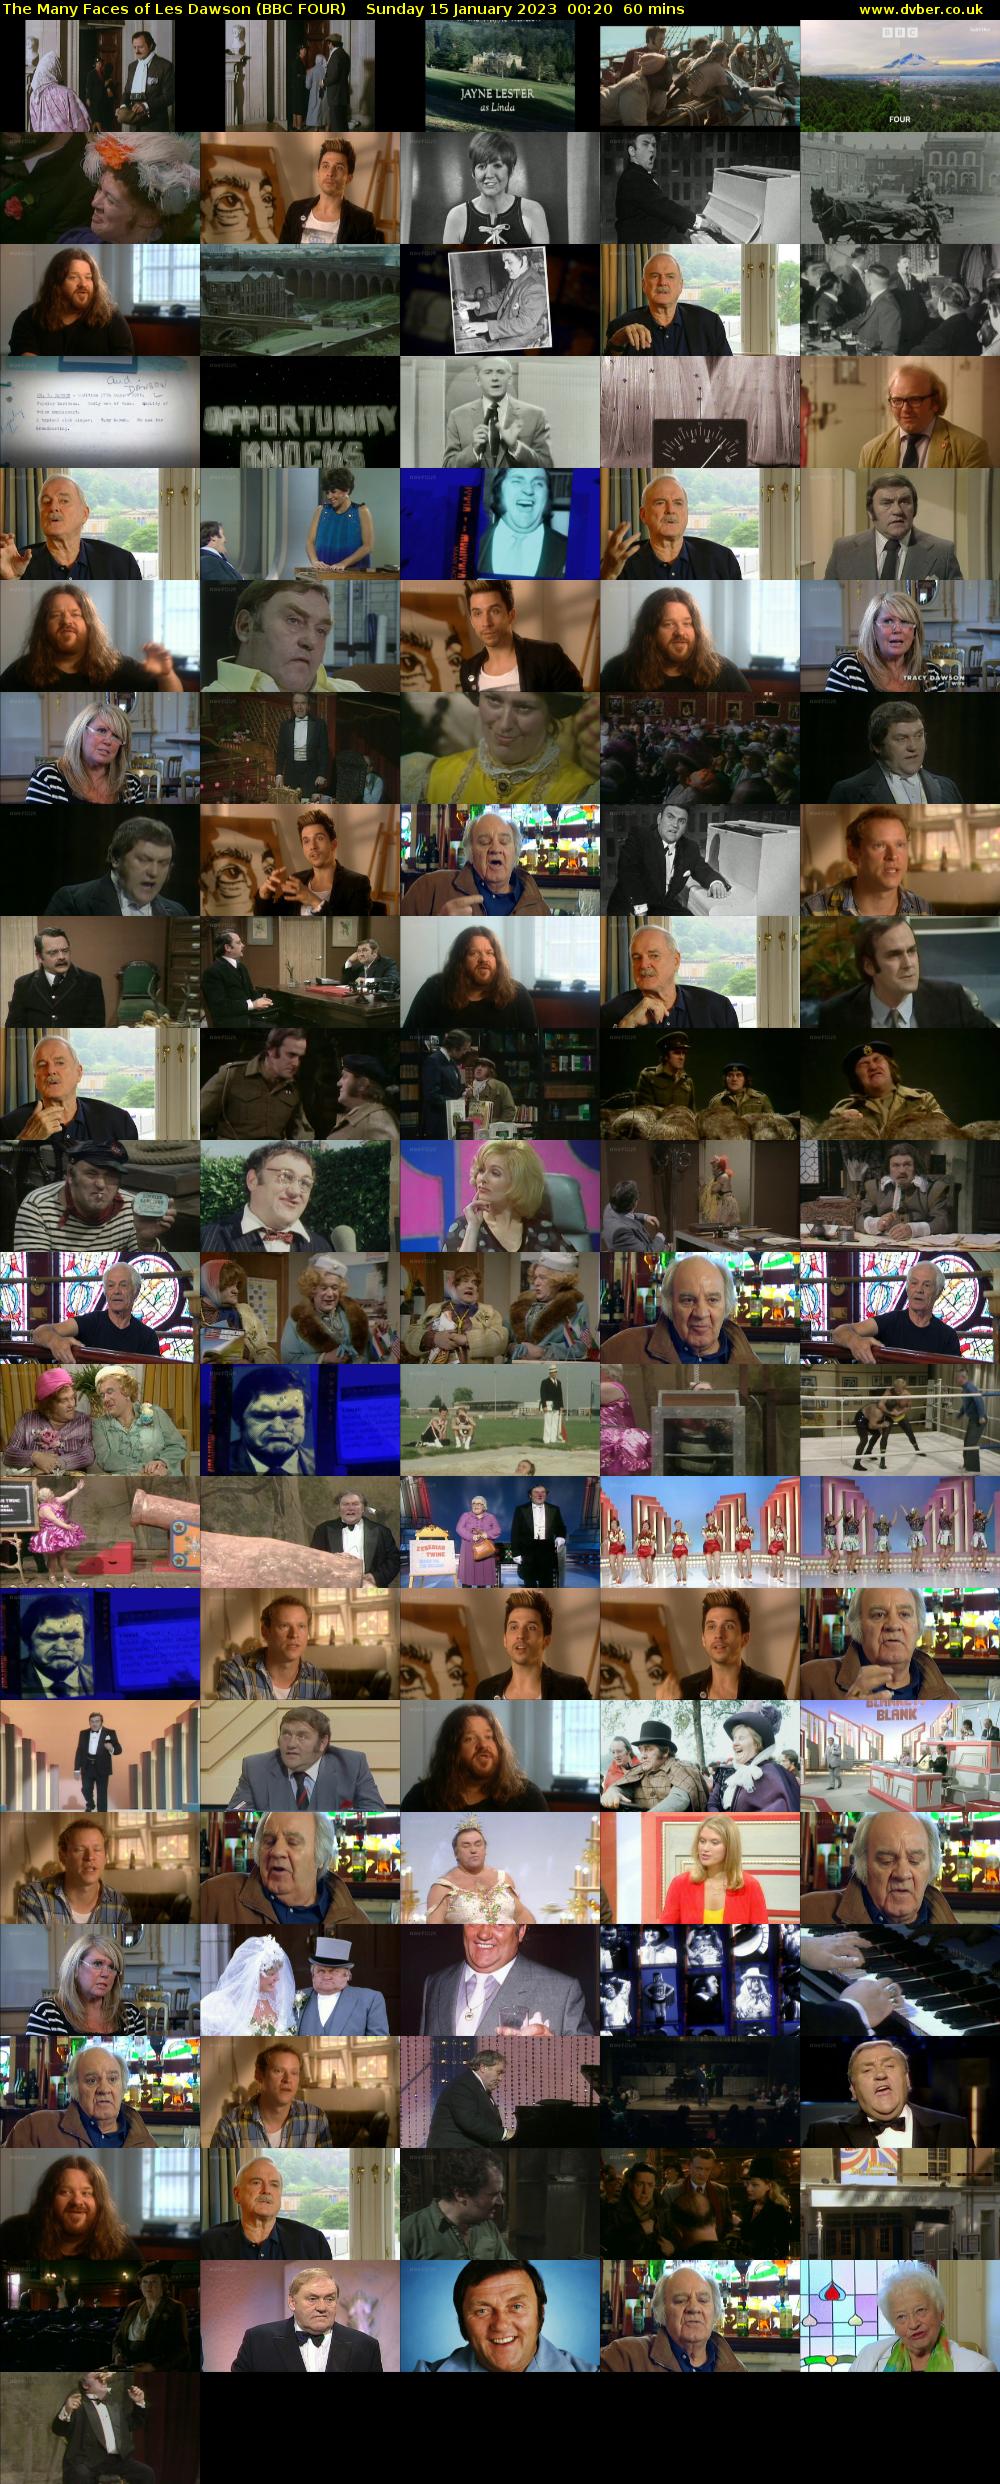 The Many Faces of Les Dawson (BBC FOUR) Sunday 15 January 2023 00:20 - 01:20